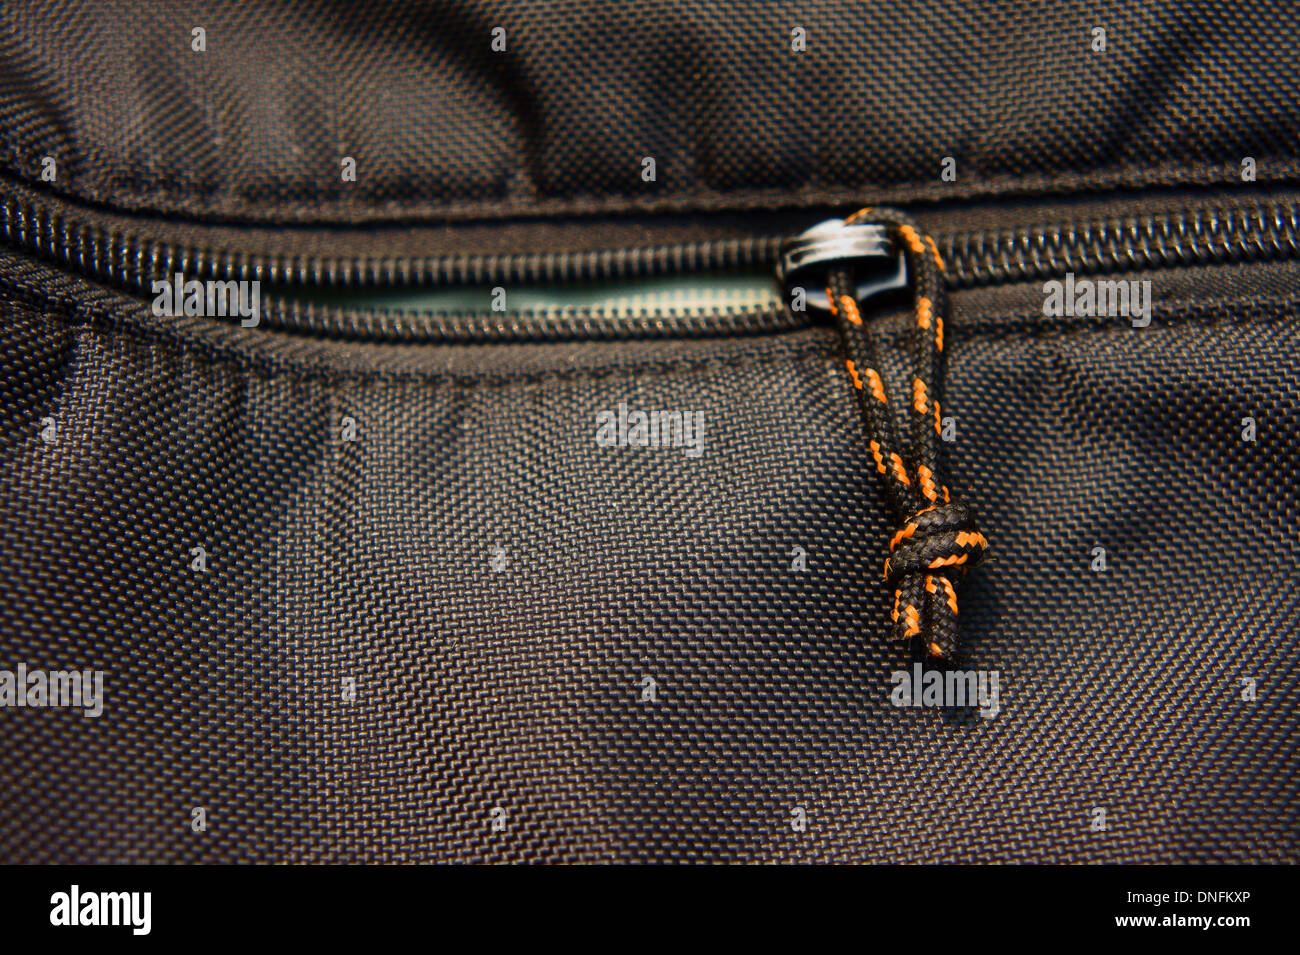 Close up of a zipper of a bag Stock Photo